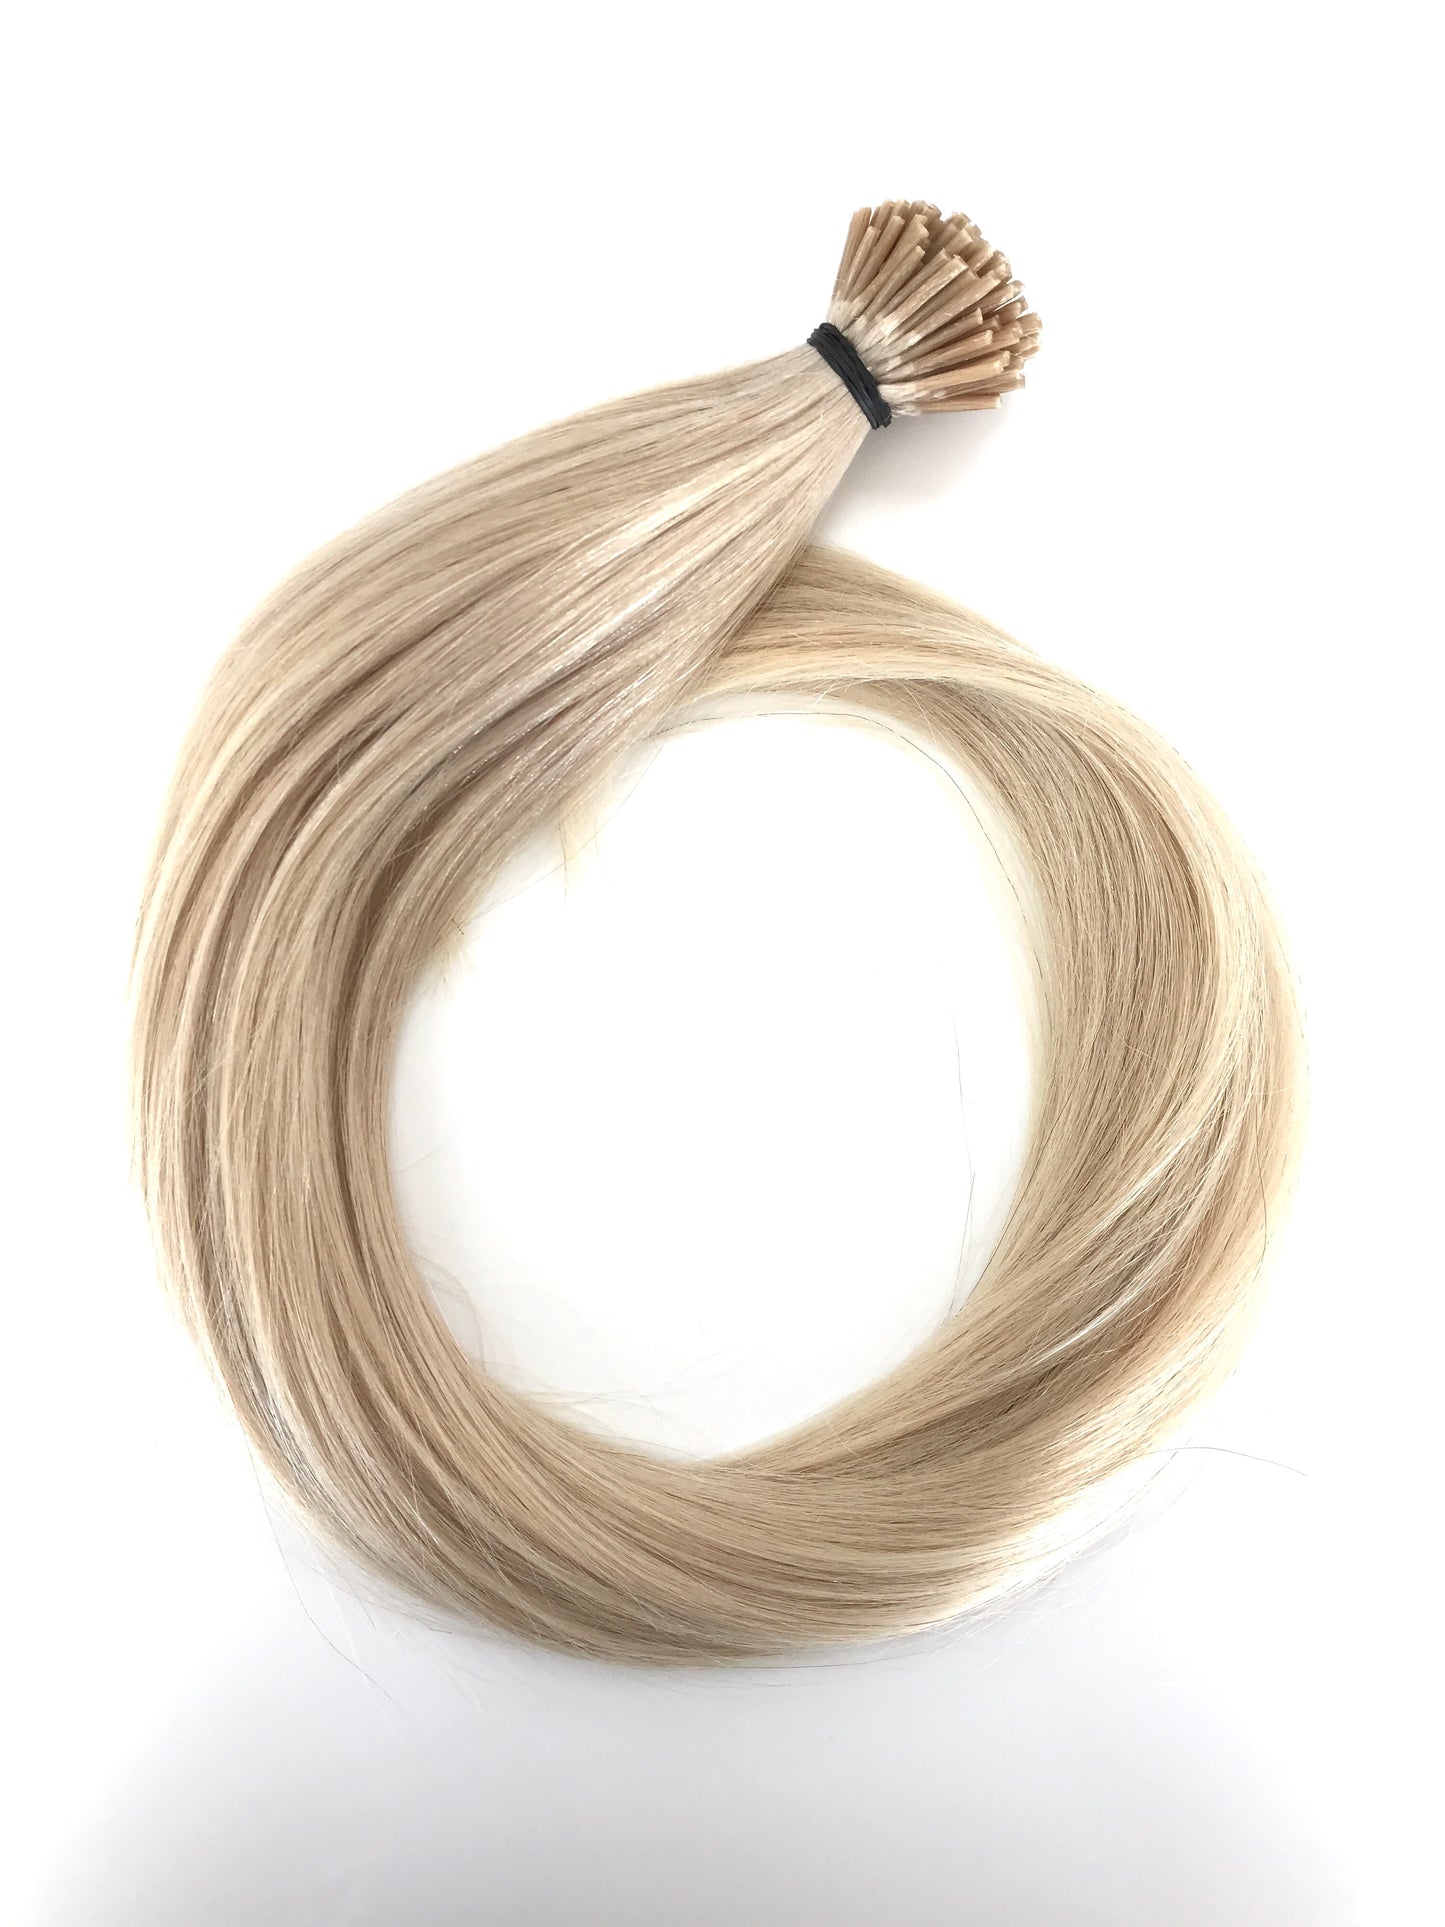 Russische Echthaarverlängerungen, 0,7 g i-Tip-Mikroringe – Virgin Hair & Beauty, die besten Haarverlängerungen, echtes Echthaar.